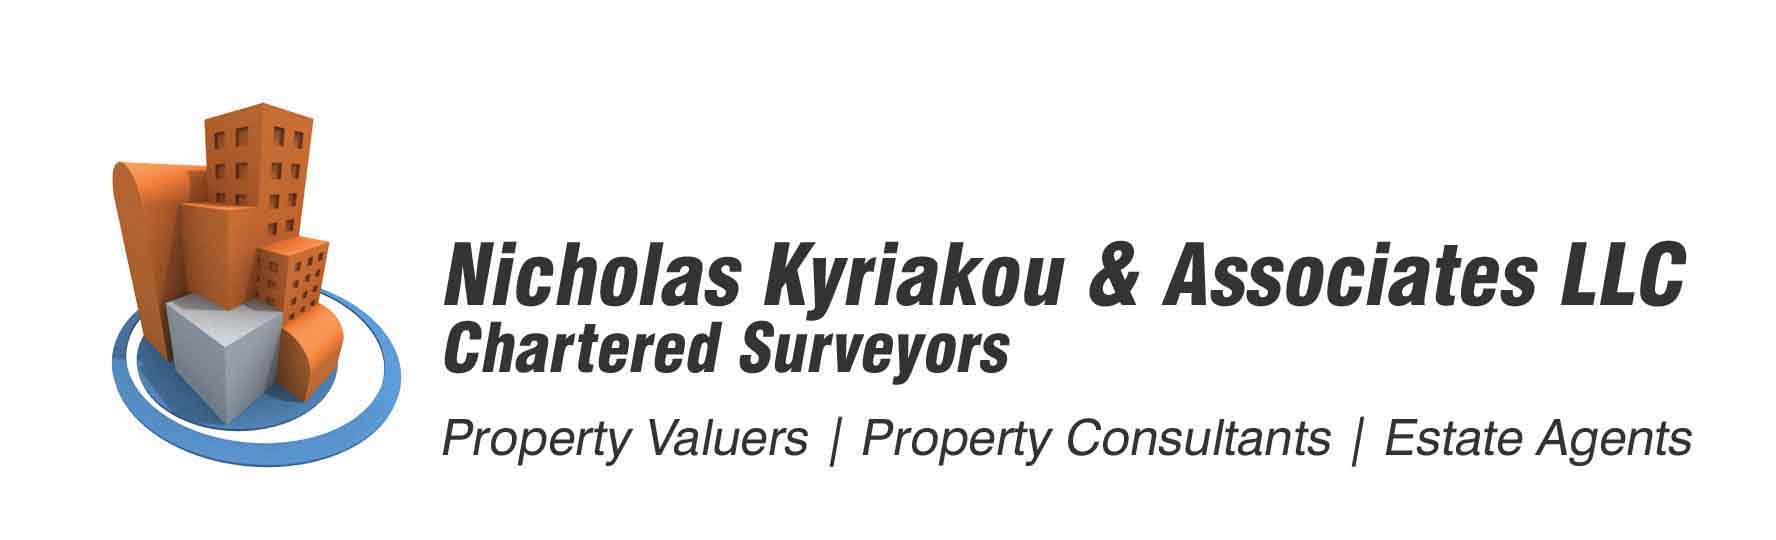 Nicholas Kyriakou & Associates LLC